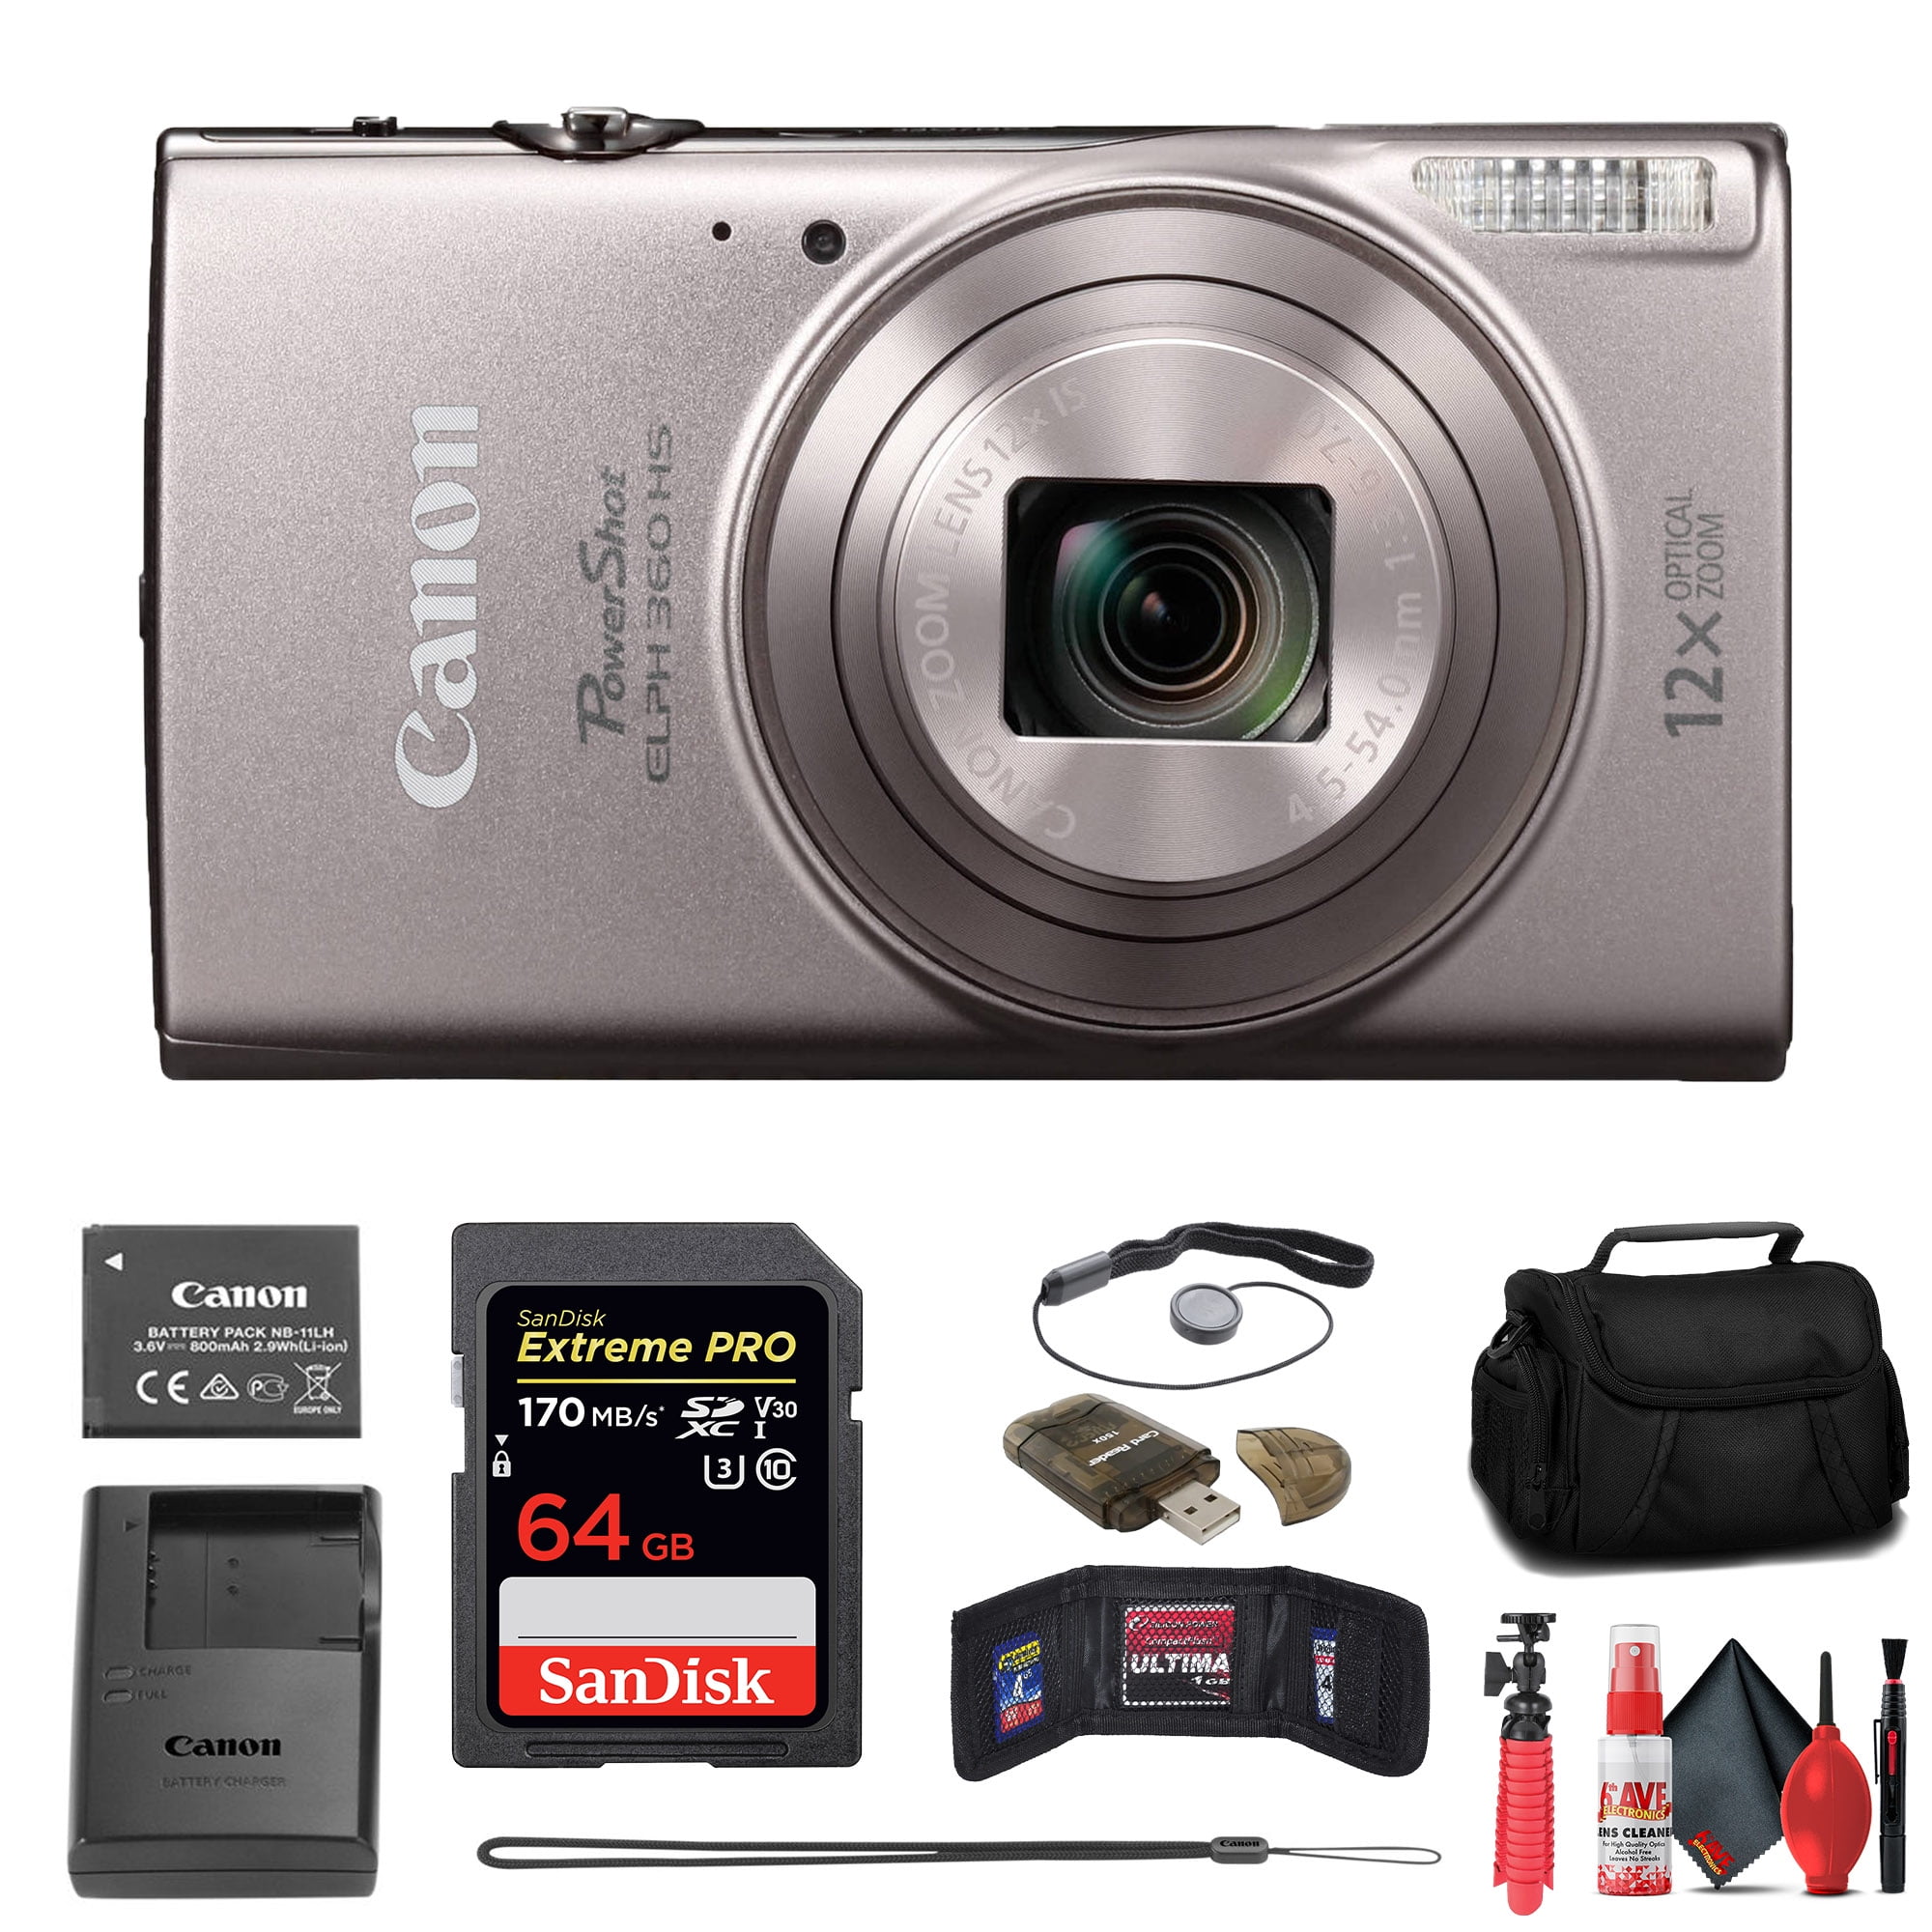 Canon PowerShot ELPH 360 HS Digital Camera (Silver) (1078C001) +